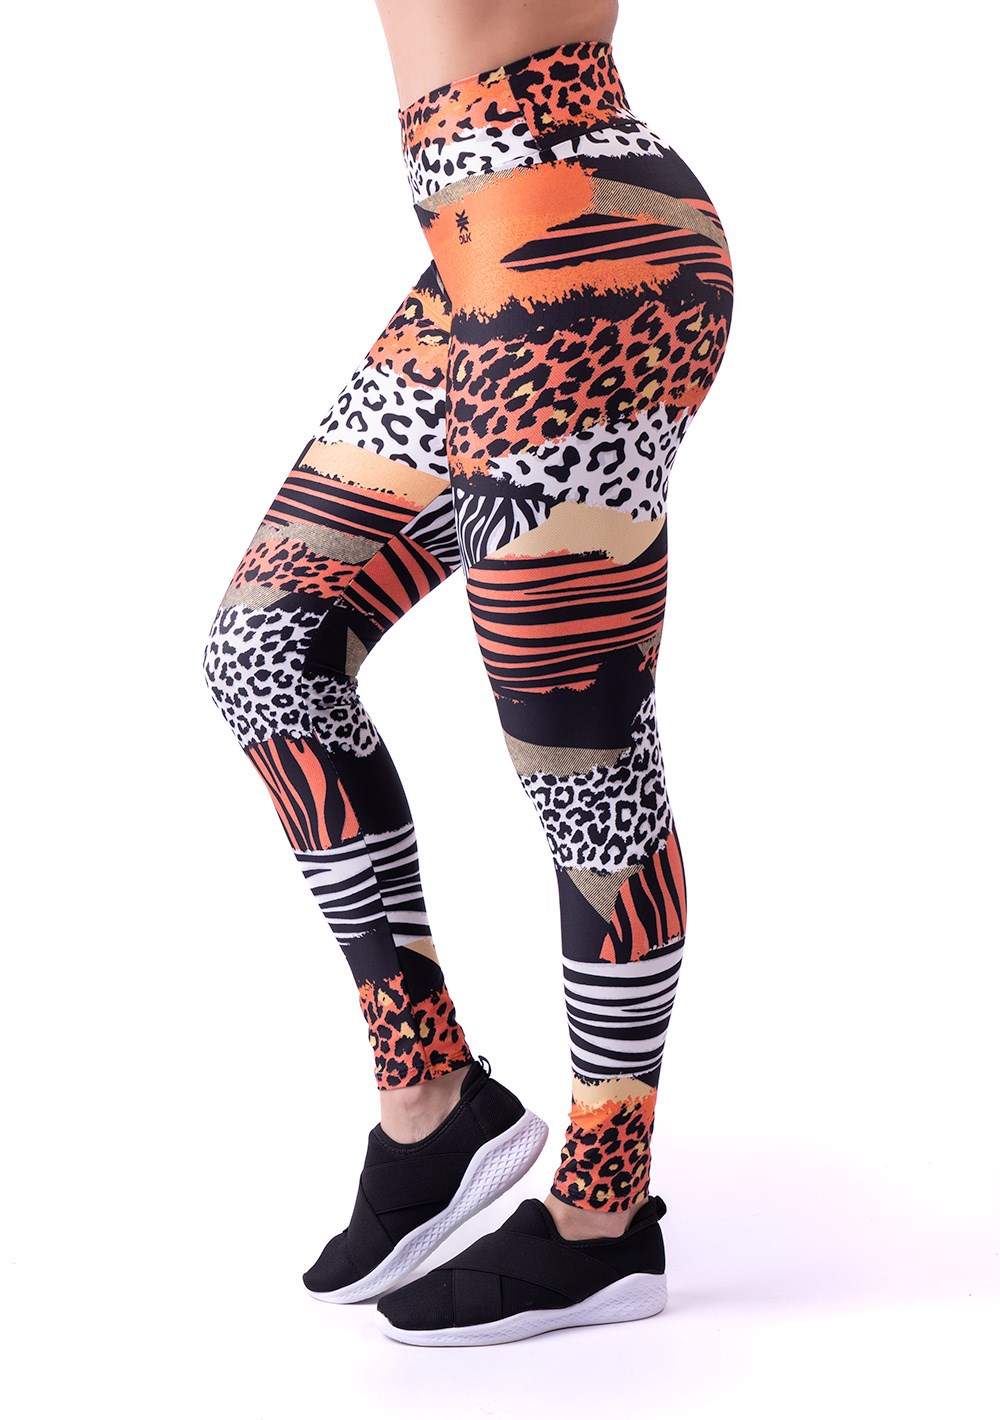 Legging fitness feminina new printed estampada animal mix